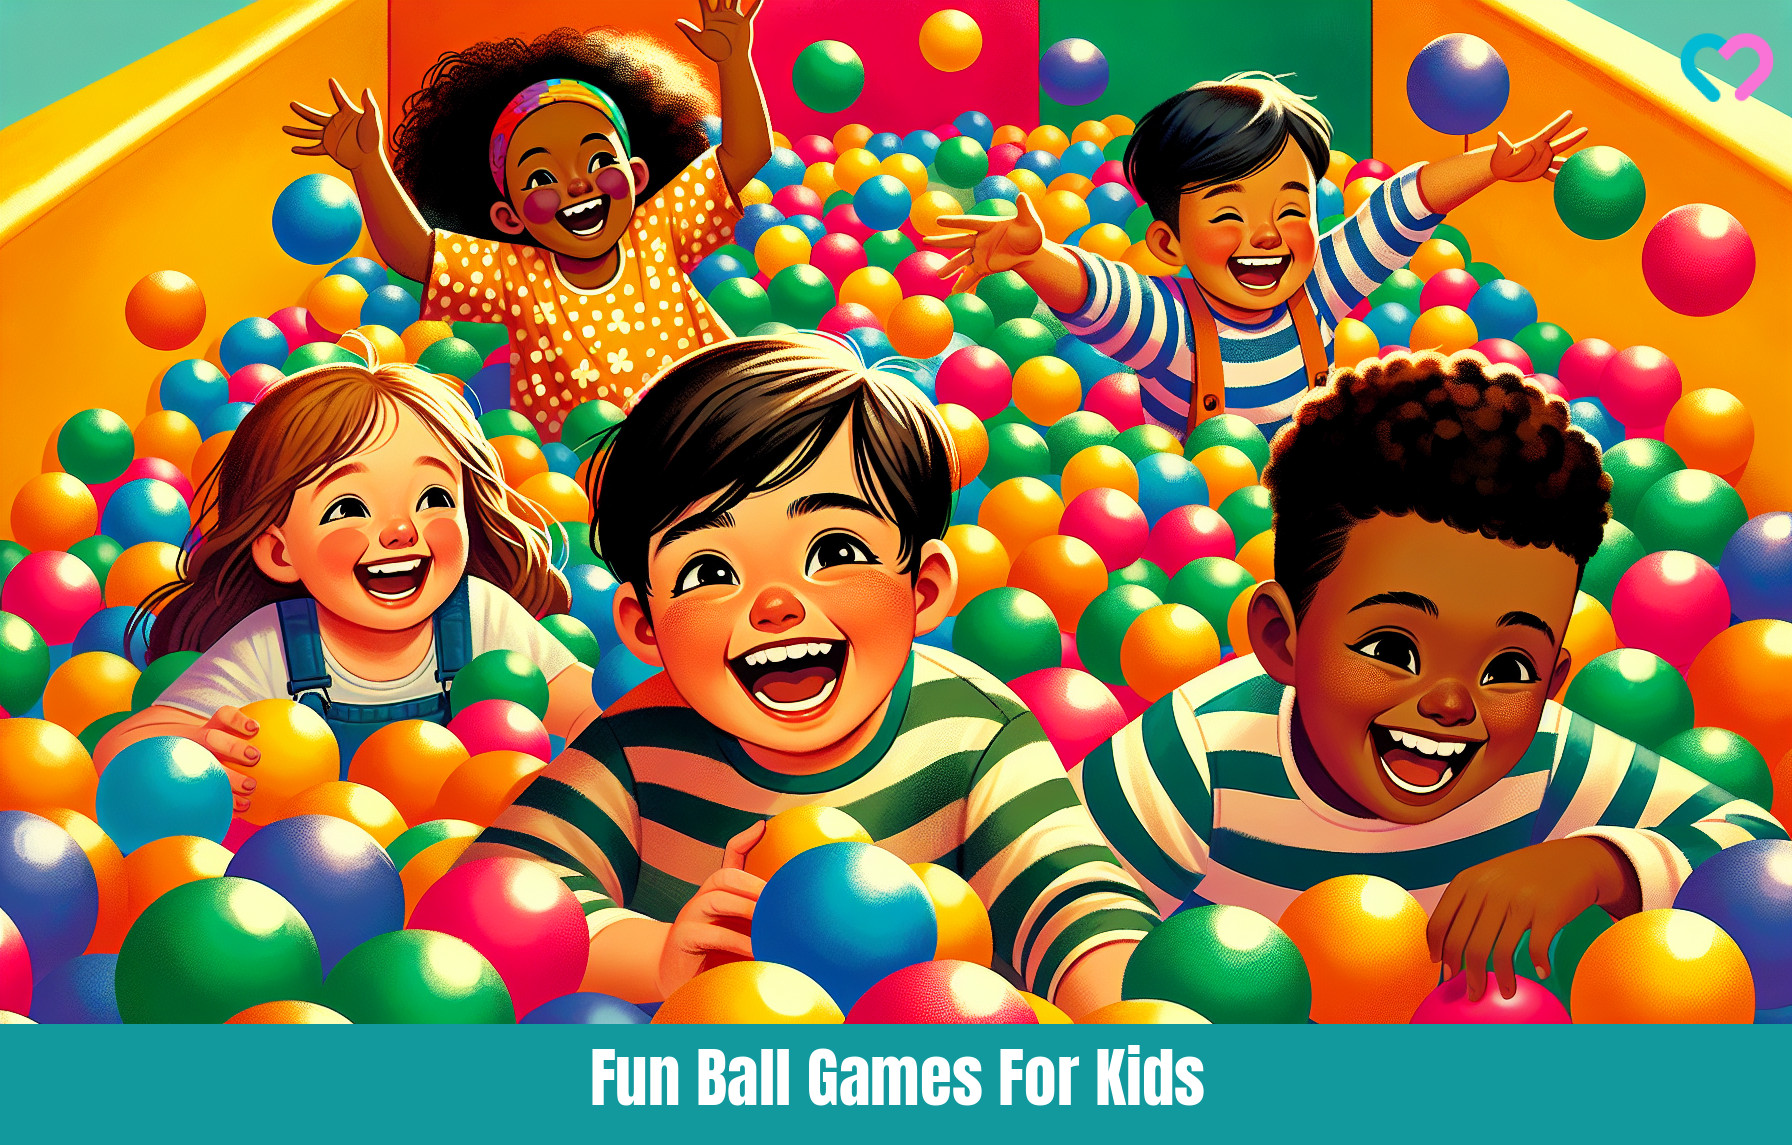 Fun Ball Games For Kids_illustration